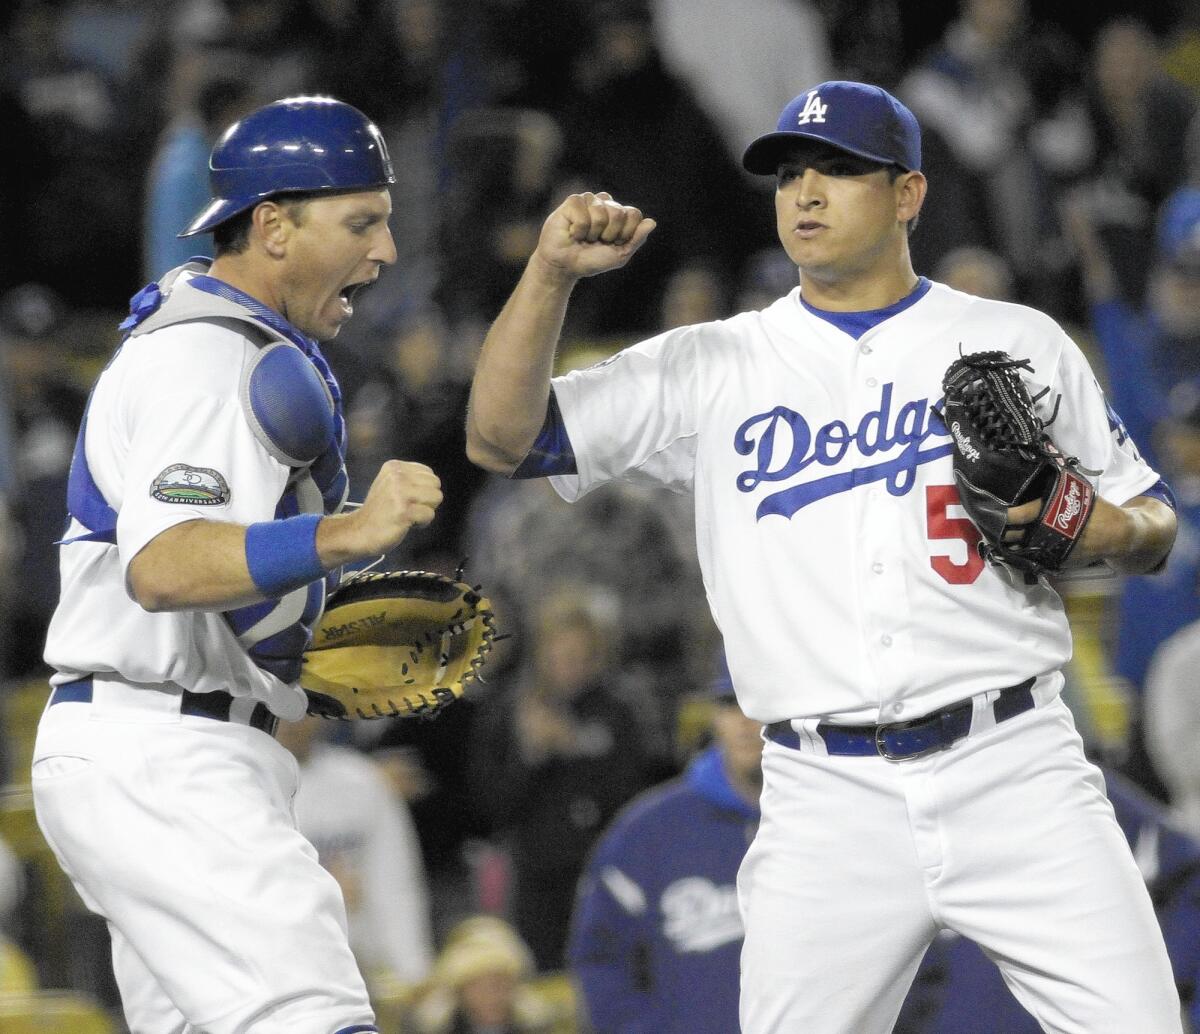 Dodgers catcher A.J. Ellis celebrates a victory with reliever Javy Guerra on April 11, 2012.